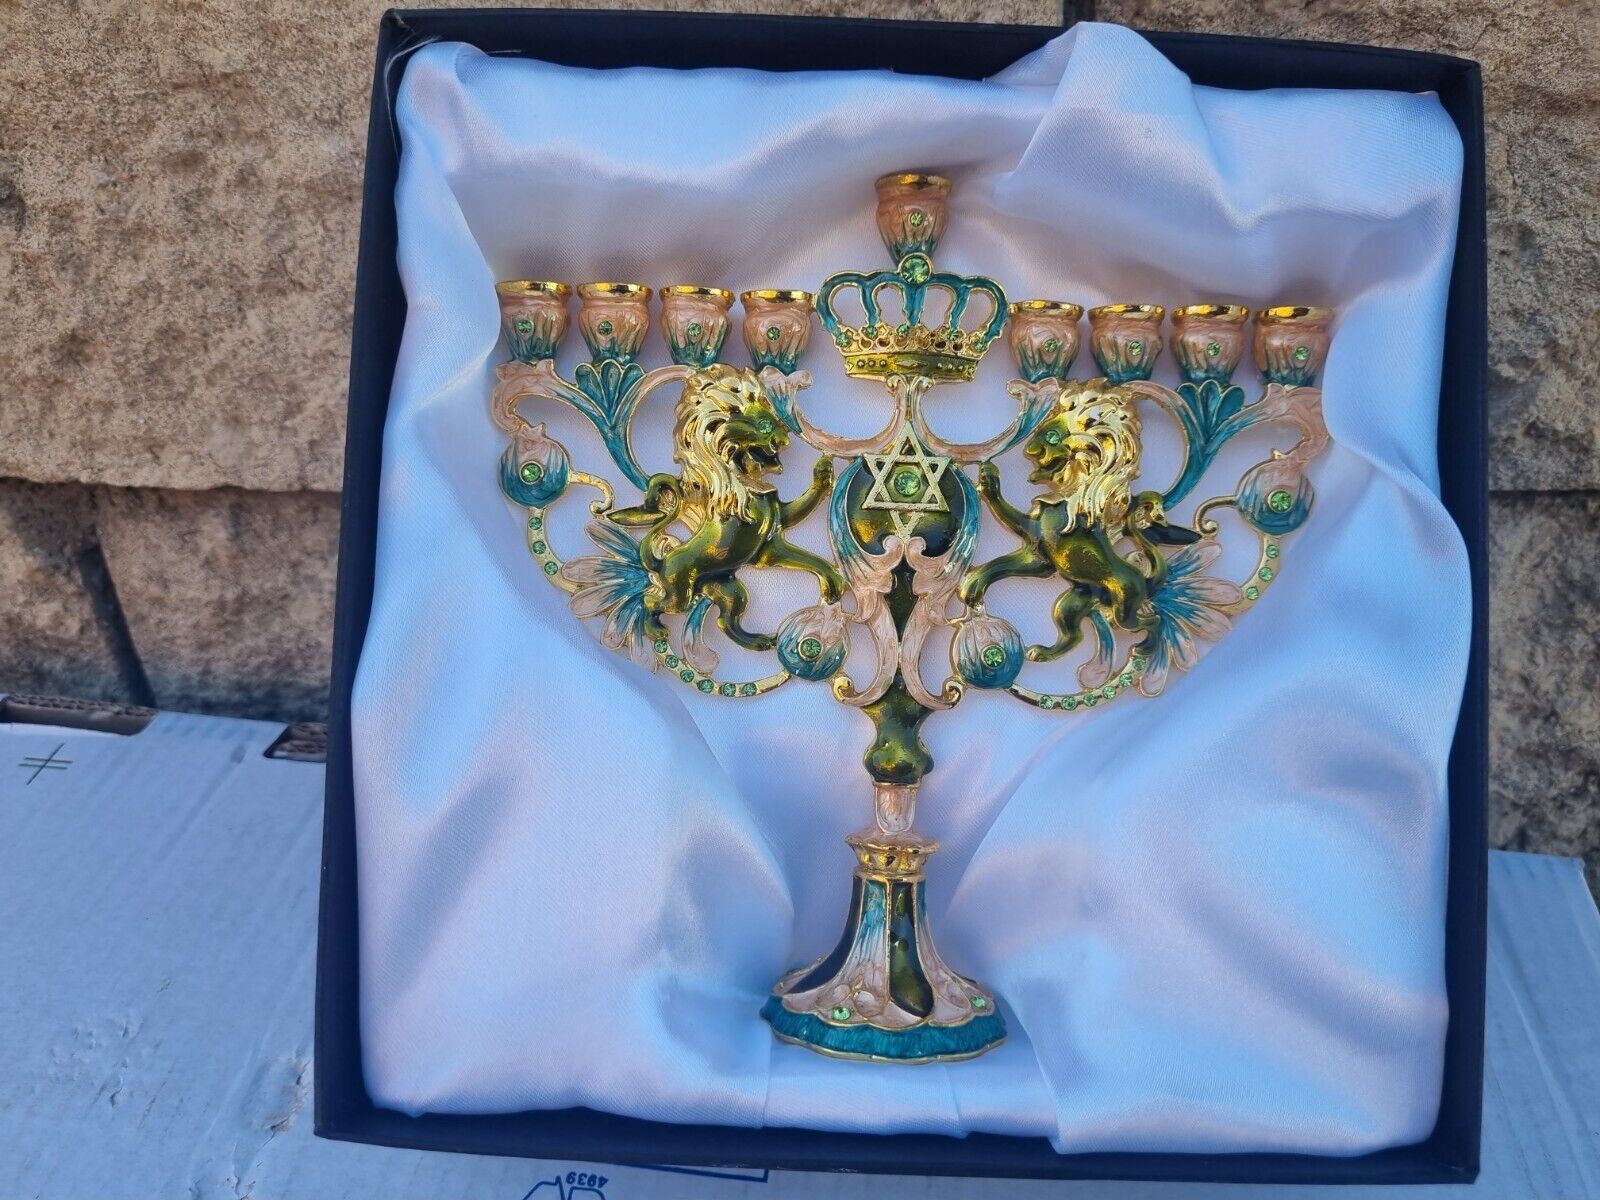 Hanukkah Menorah Lion Of Judah design 9 Branches Vintage Chanukah Candle Holder